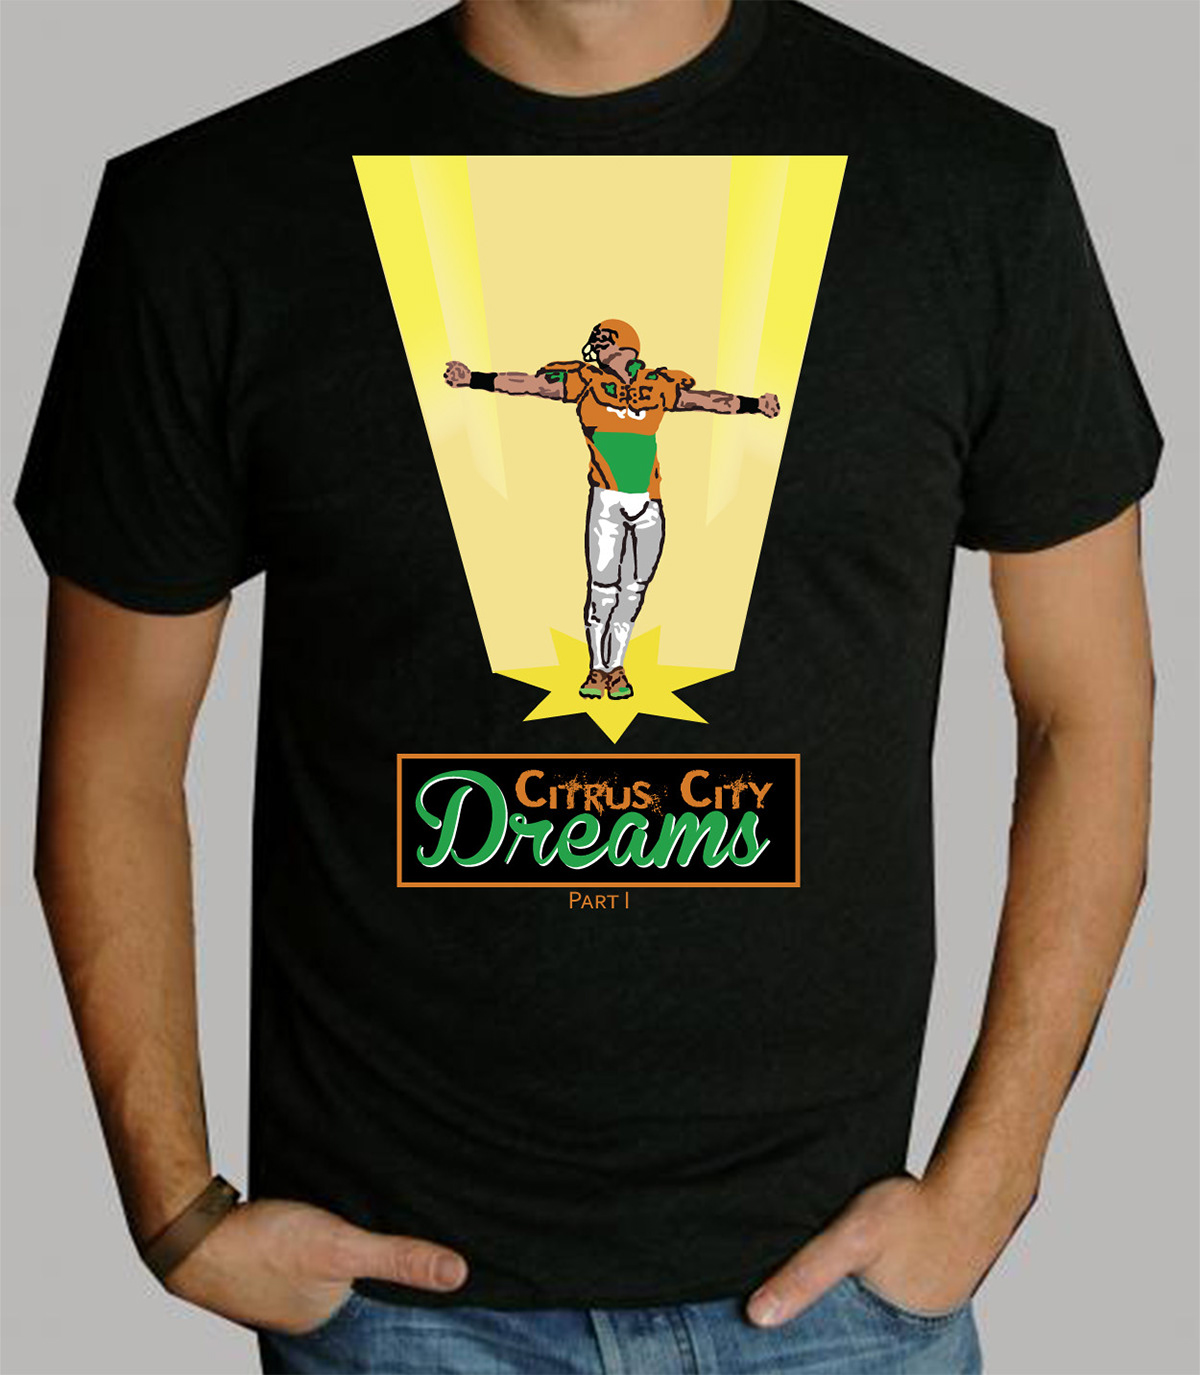 Citrus City Dreams Trilogy of books t-shirt graphics Riverside football